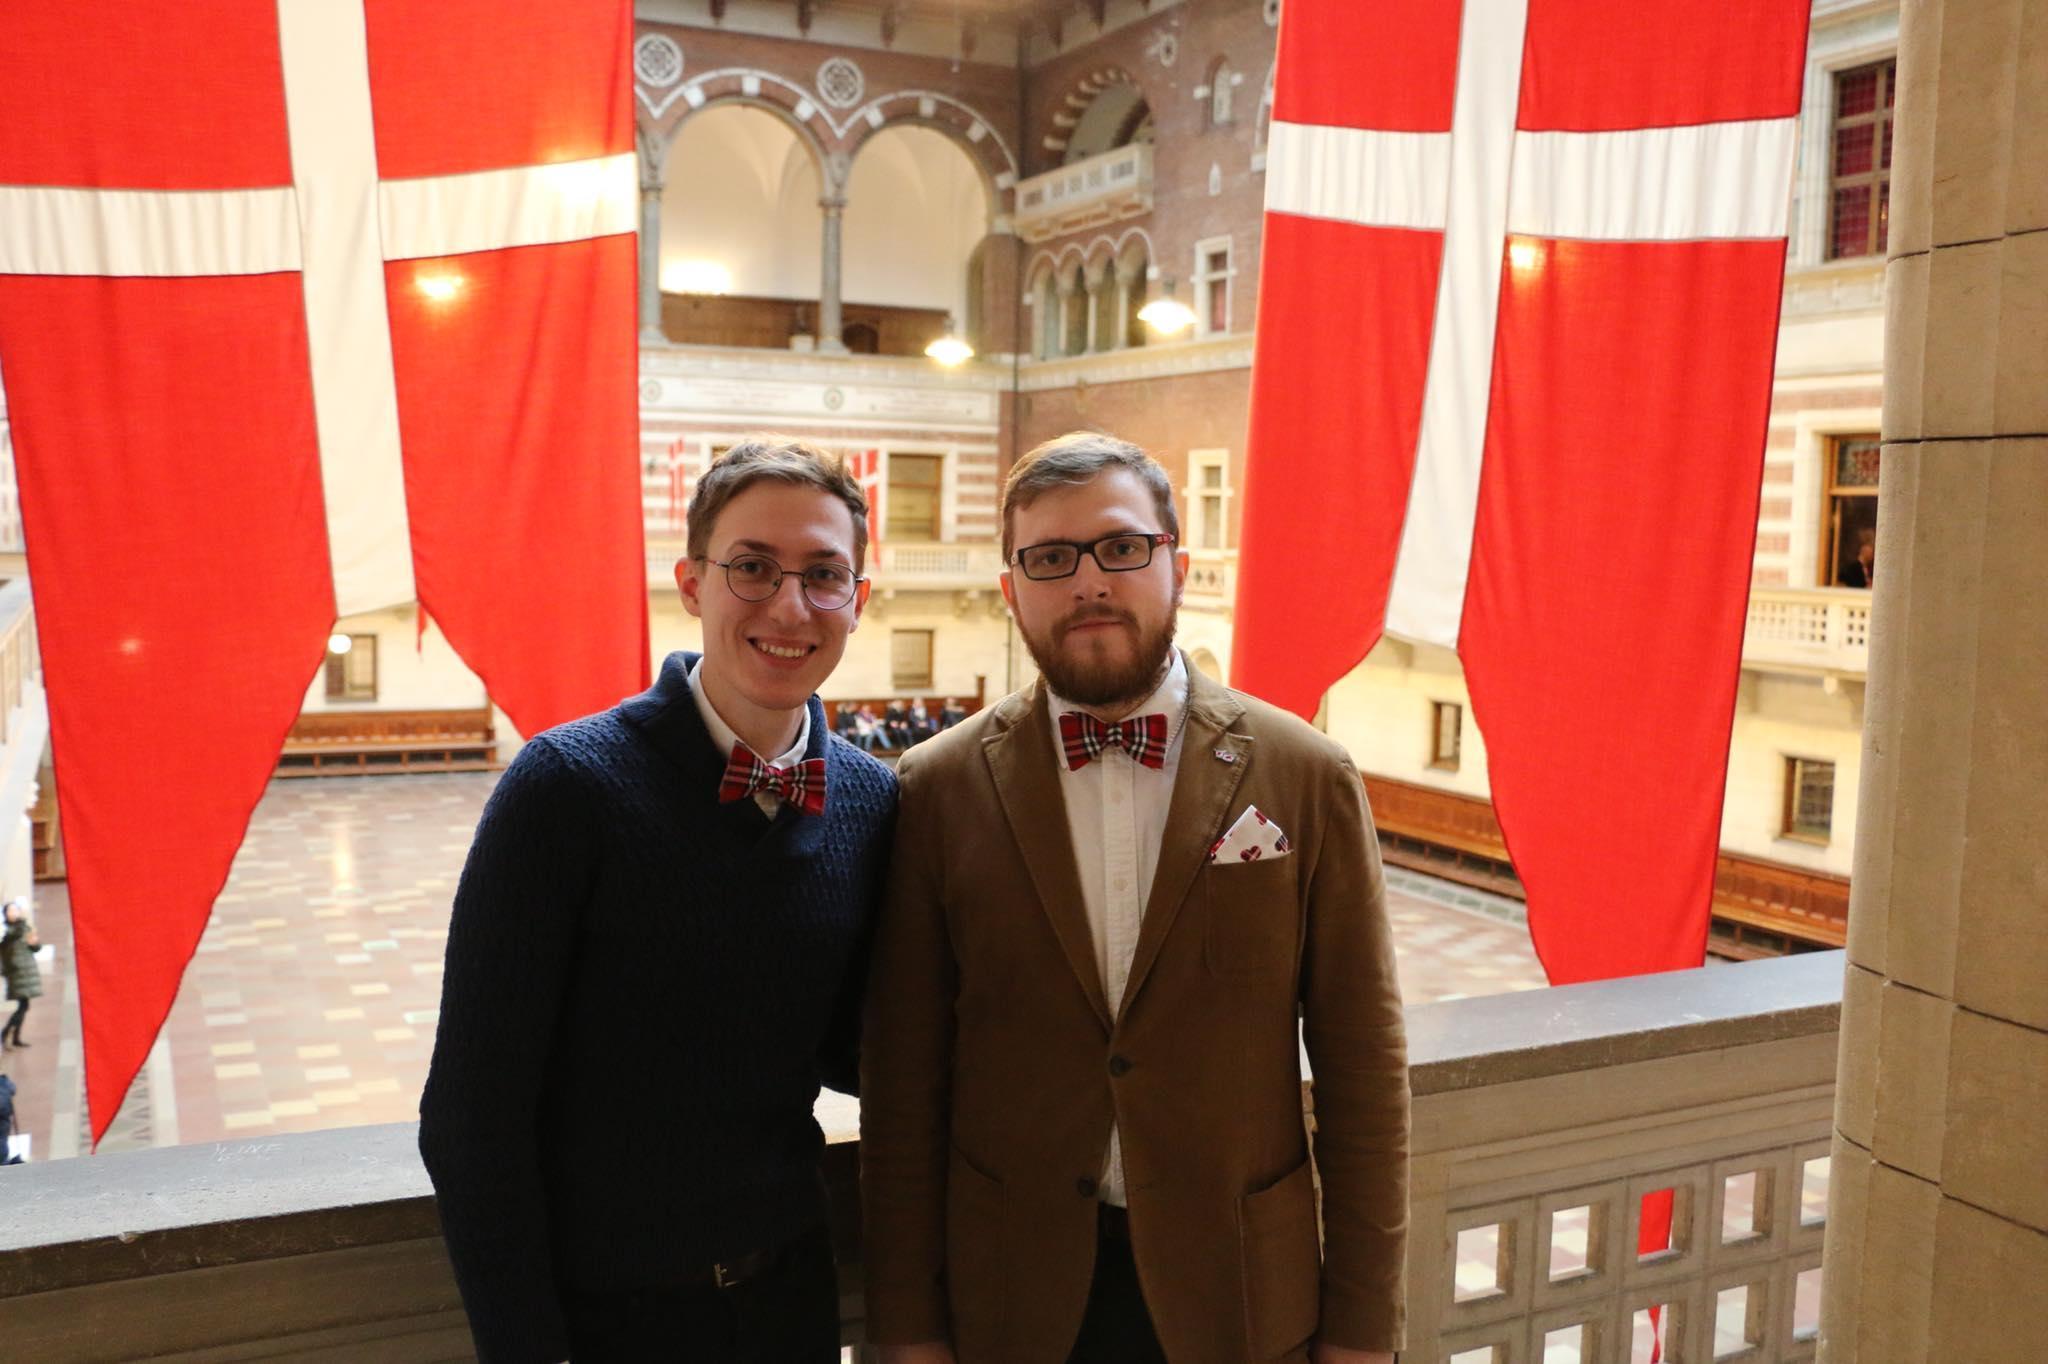 Eugene Wojciechowski and Paul Stotzko married in Denmark, Copenhagen